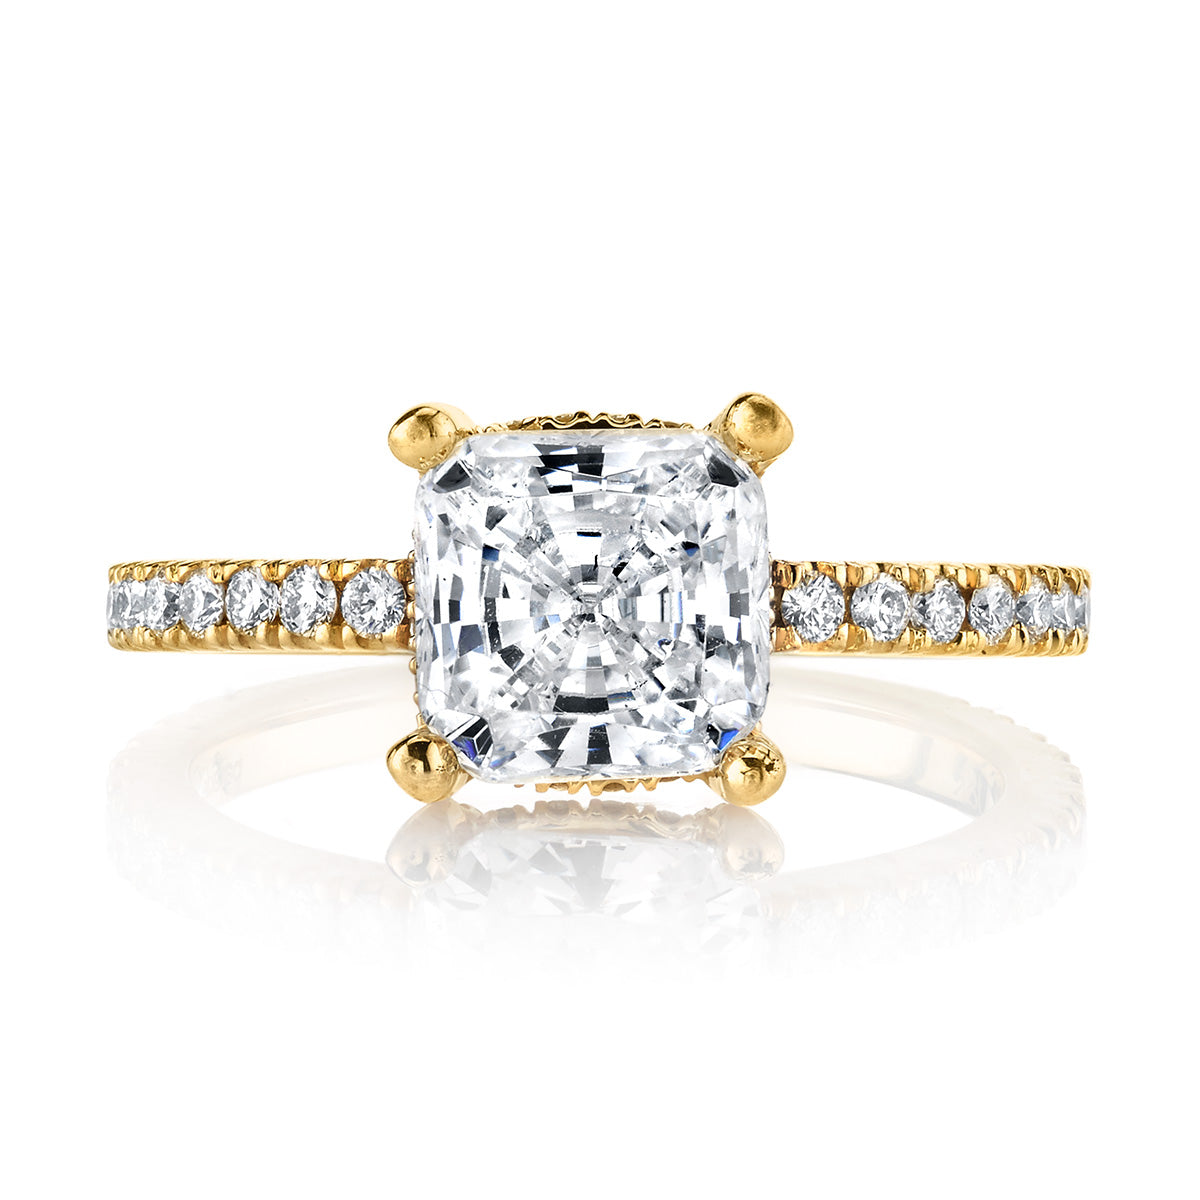 14k Yellow Gold Cushion Center Semi-Mount Engagement Ring with Diamond Basket